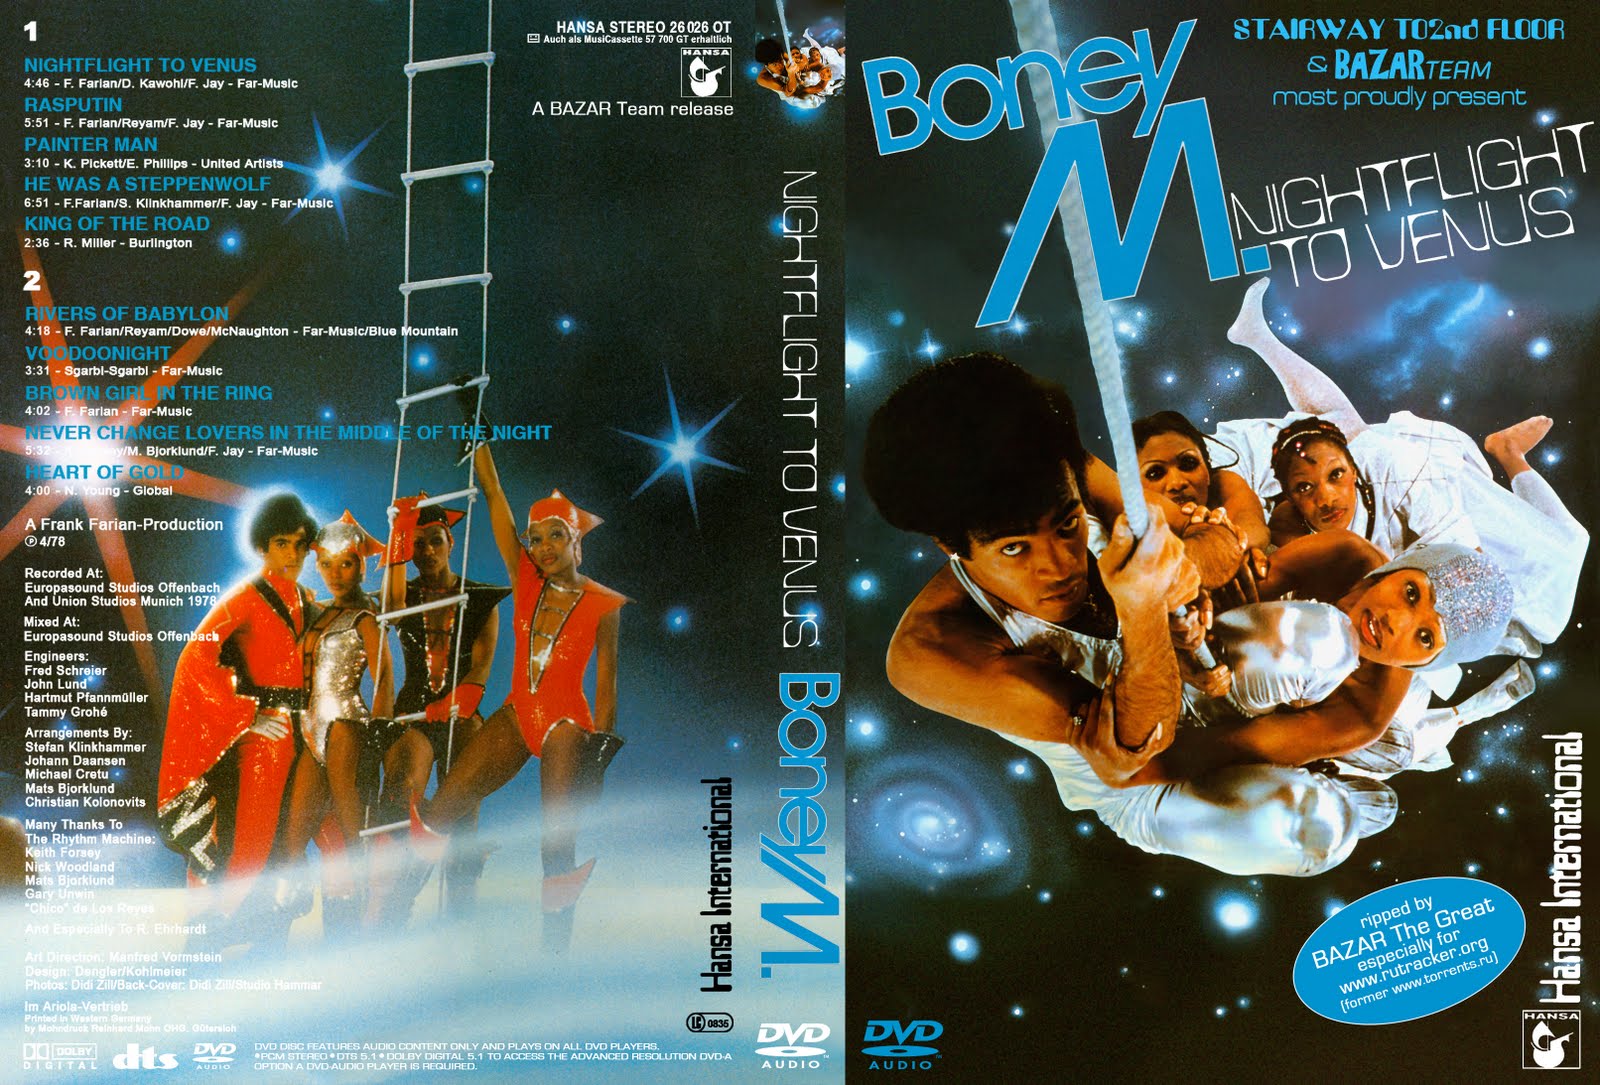 Boney m venus. Boney m Venus Nightflight. 1978 - Nightflight to Venus. Boney m – Nightflight to Venus. Бони м полет на Венеру.